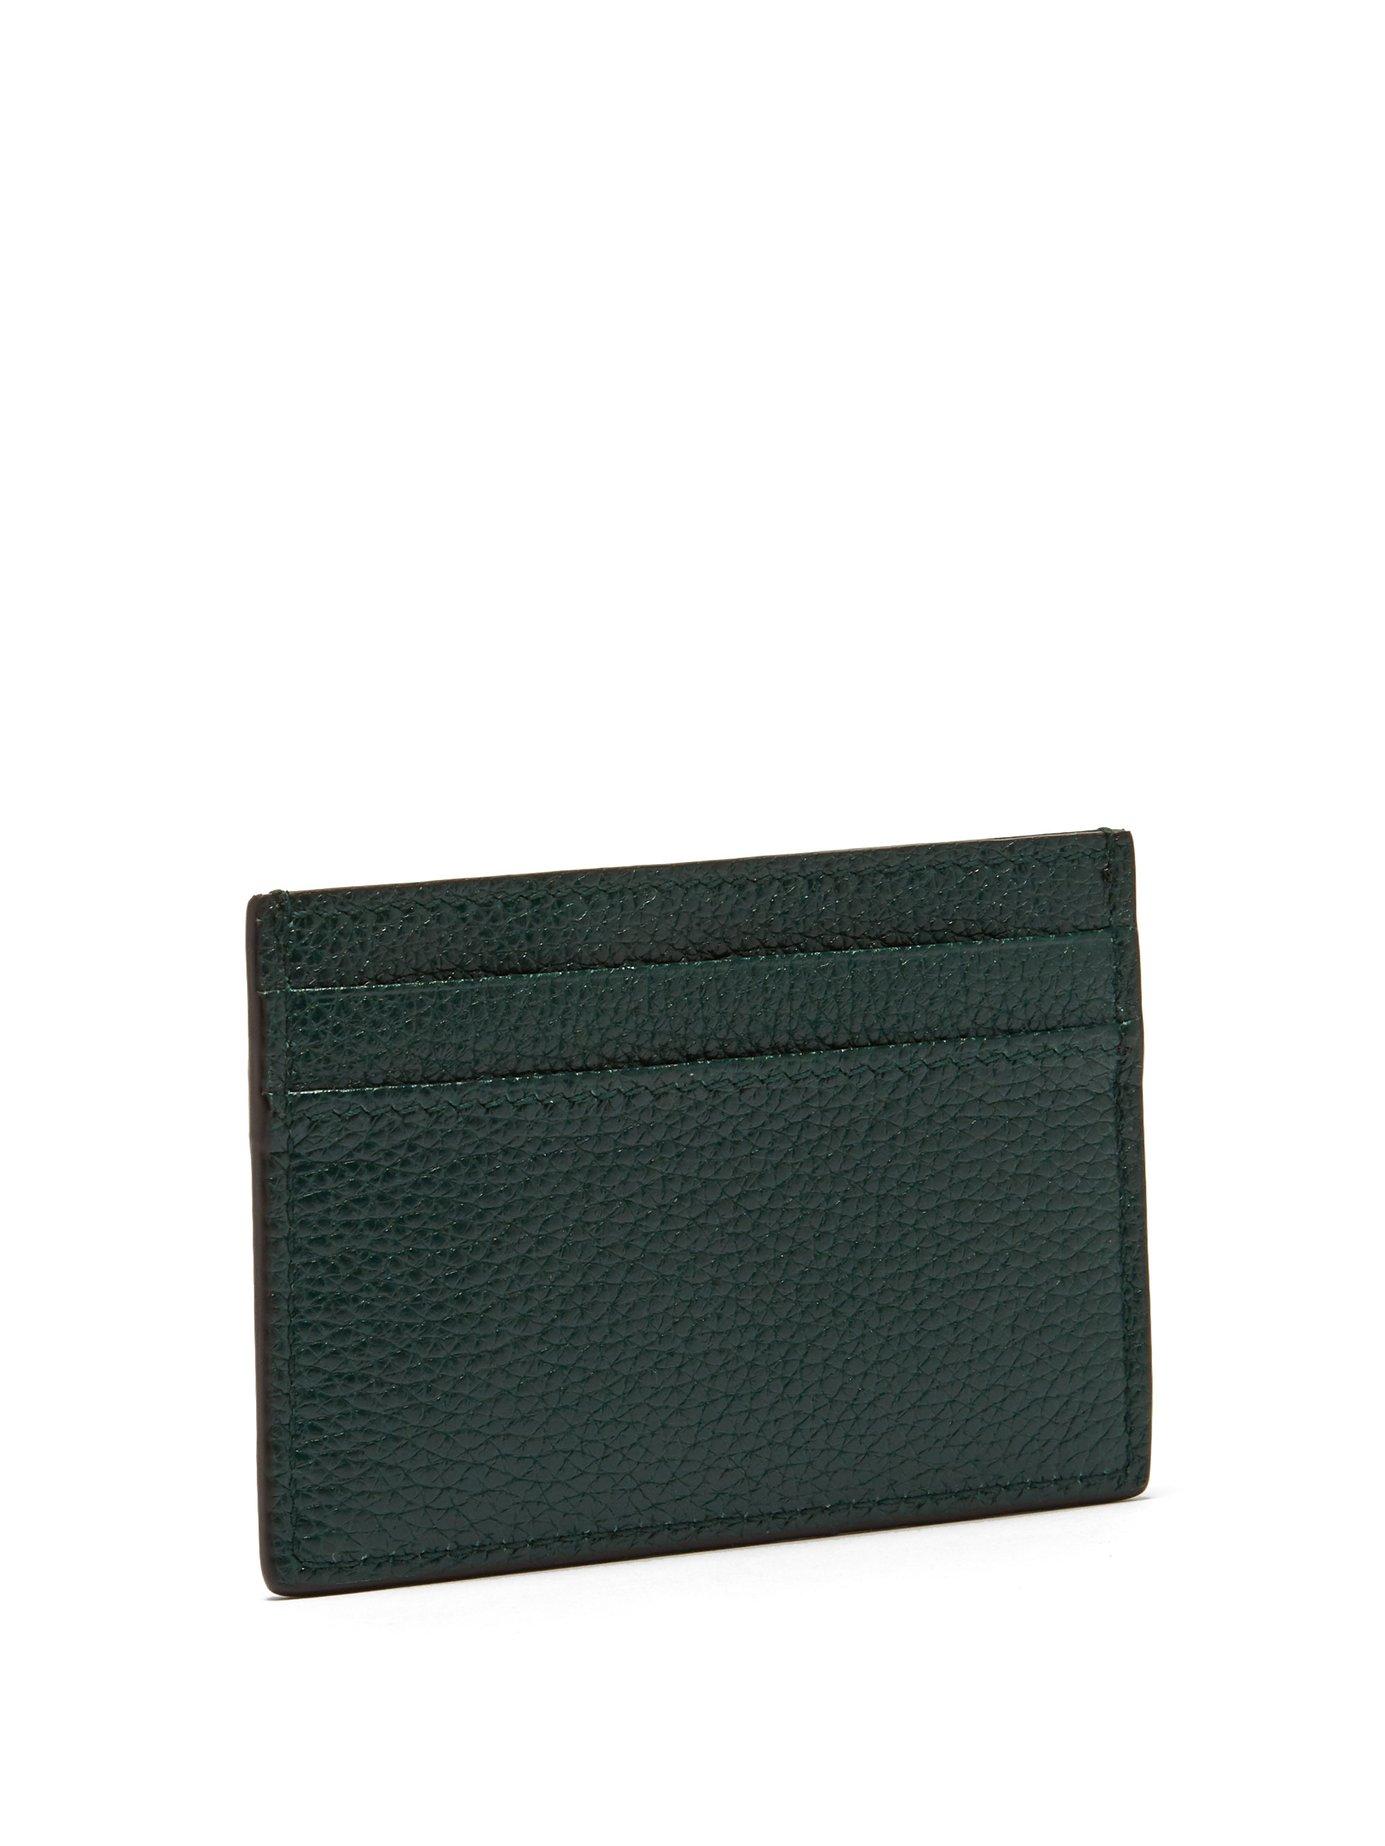 Gucci Leather Zumi Card Case in Dark Green (Green) | Lyst